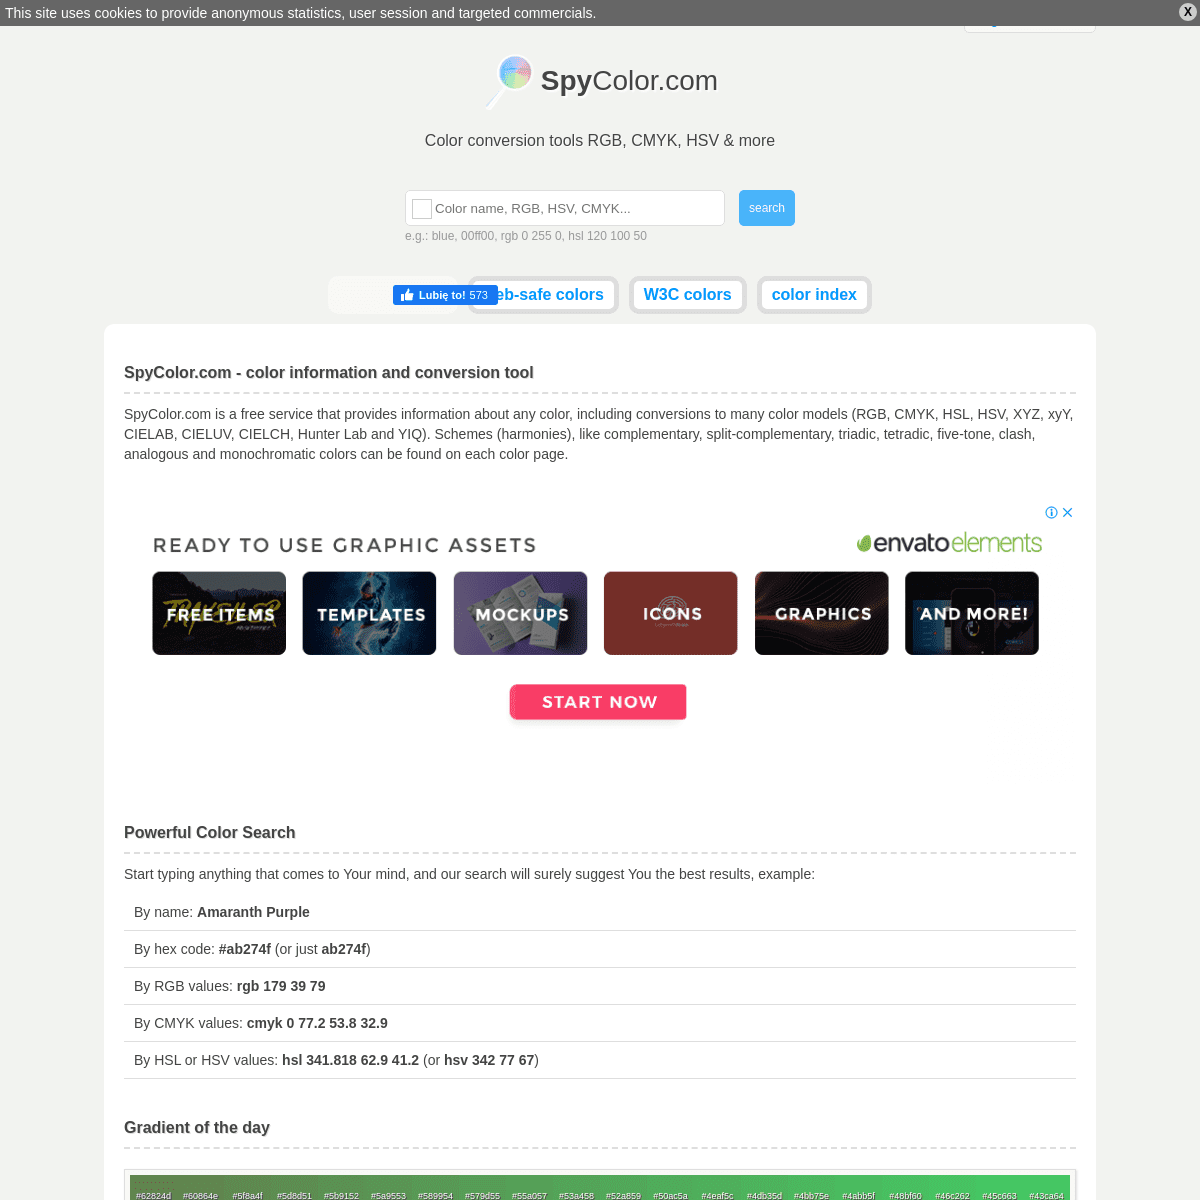 A complete backup of spycolor.com